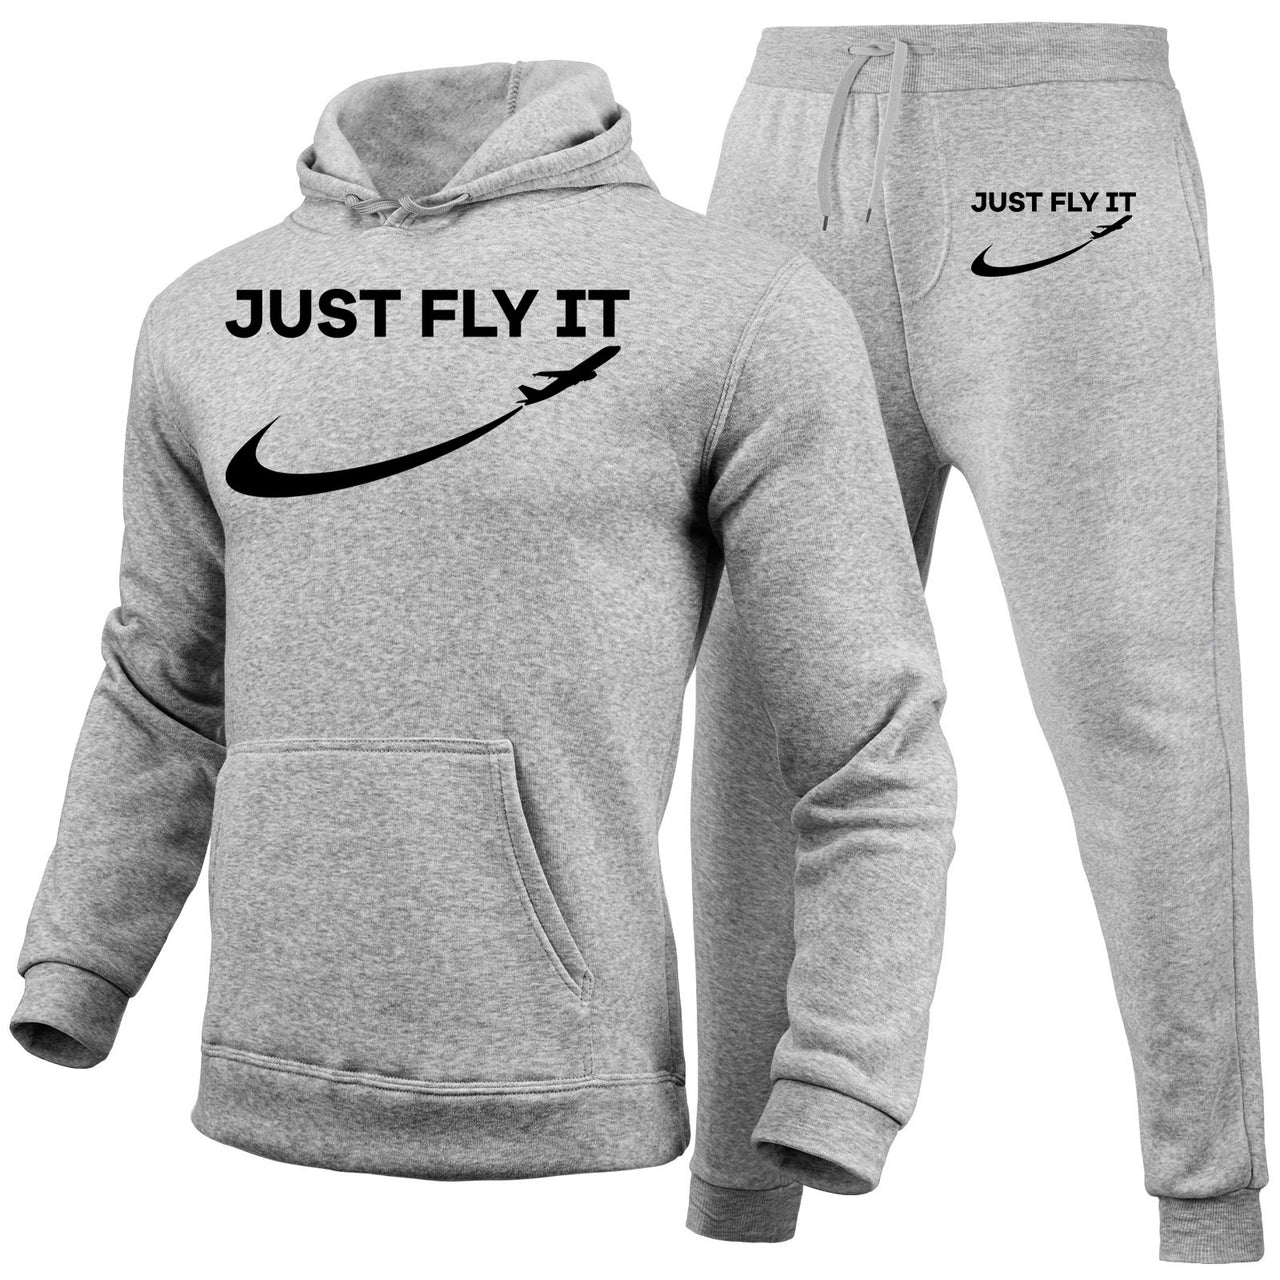 Just Fly It 2 Designed Hoodies & Sweatpants Set